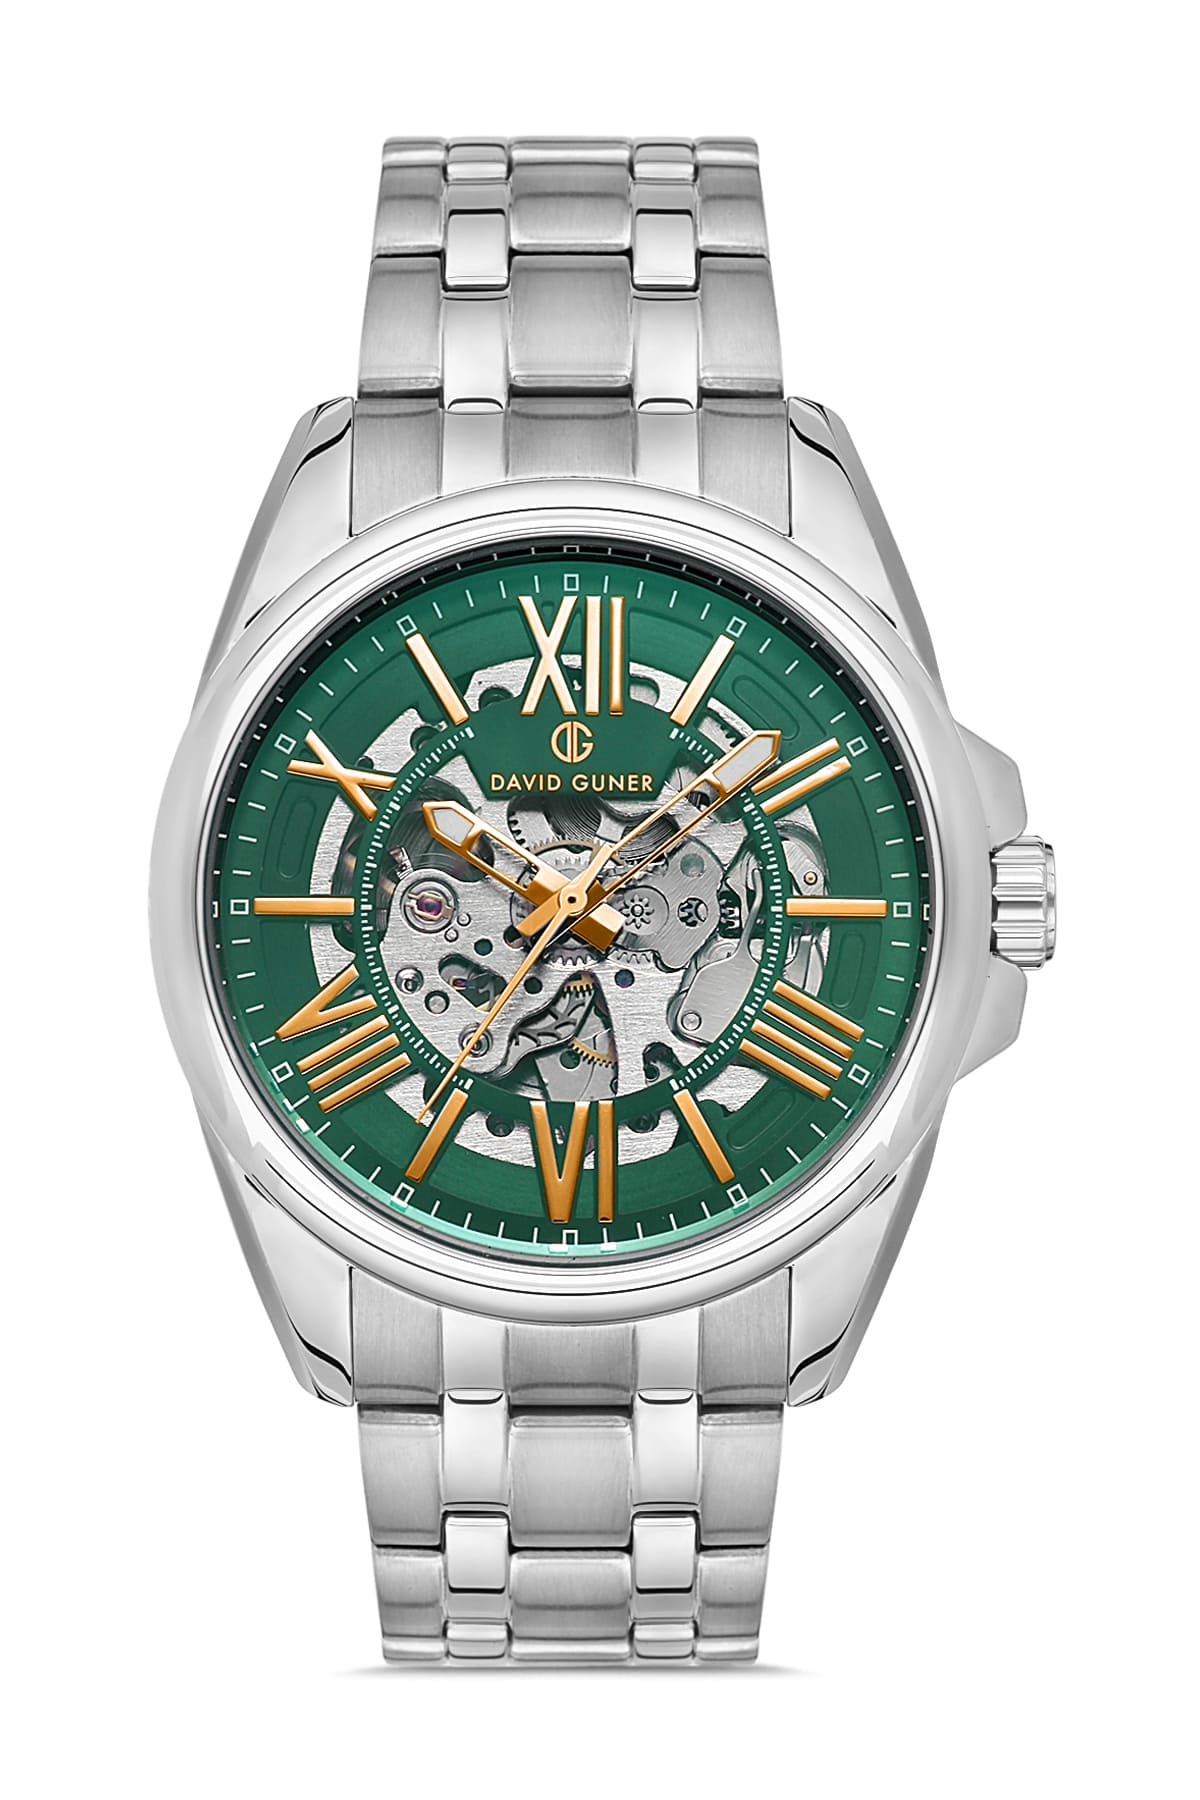 DAVID GUNER Roman Numeral Automatic Function Green Dial Men's Wristwatch